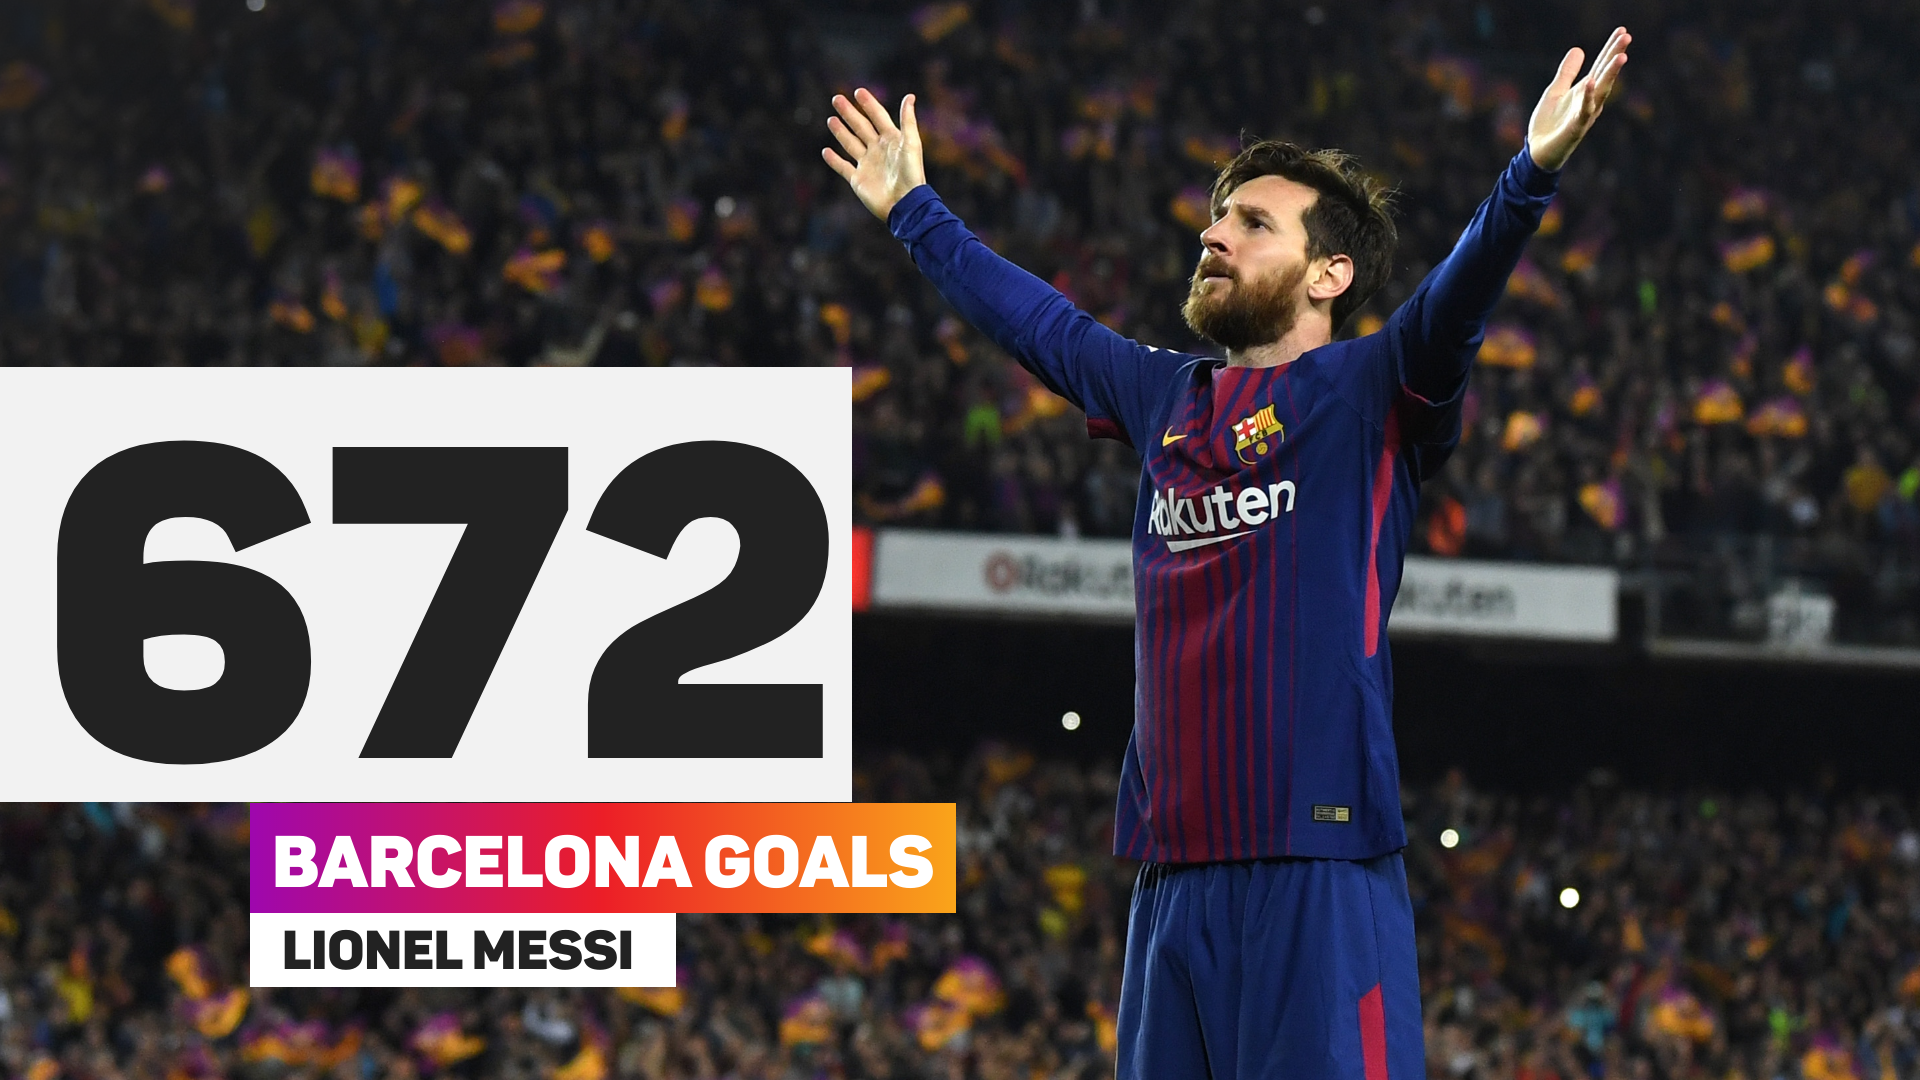 Lionel Messi is Barcelona's record goalscorer